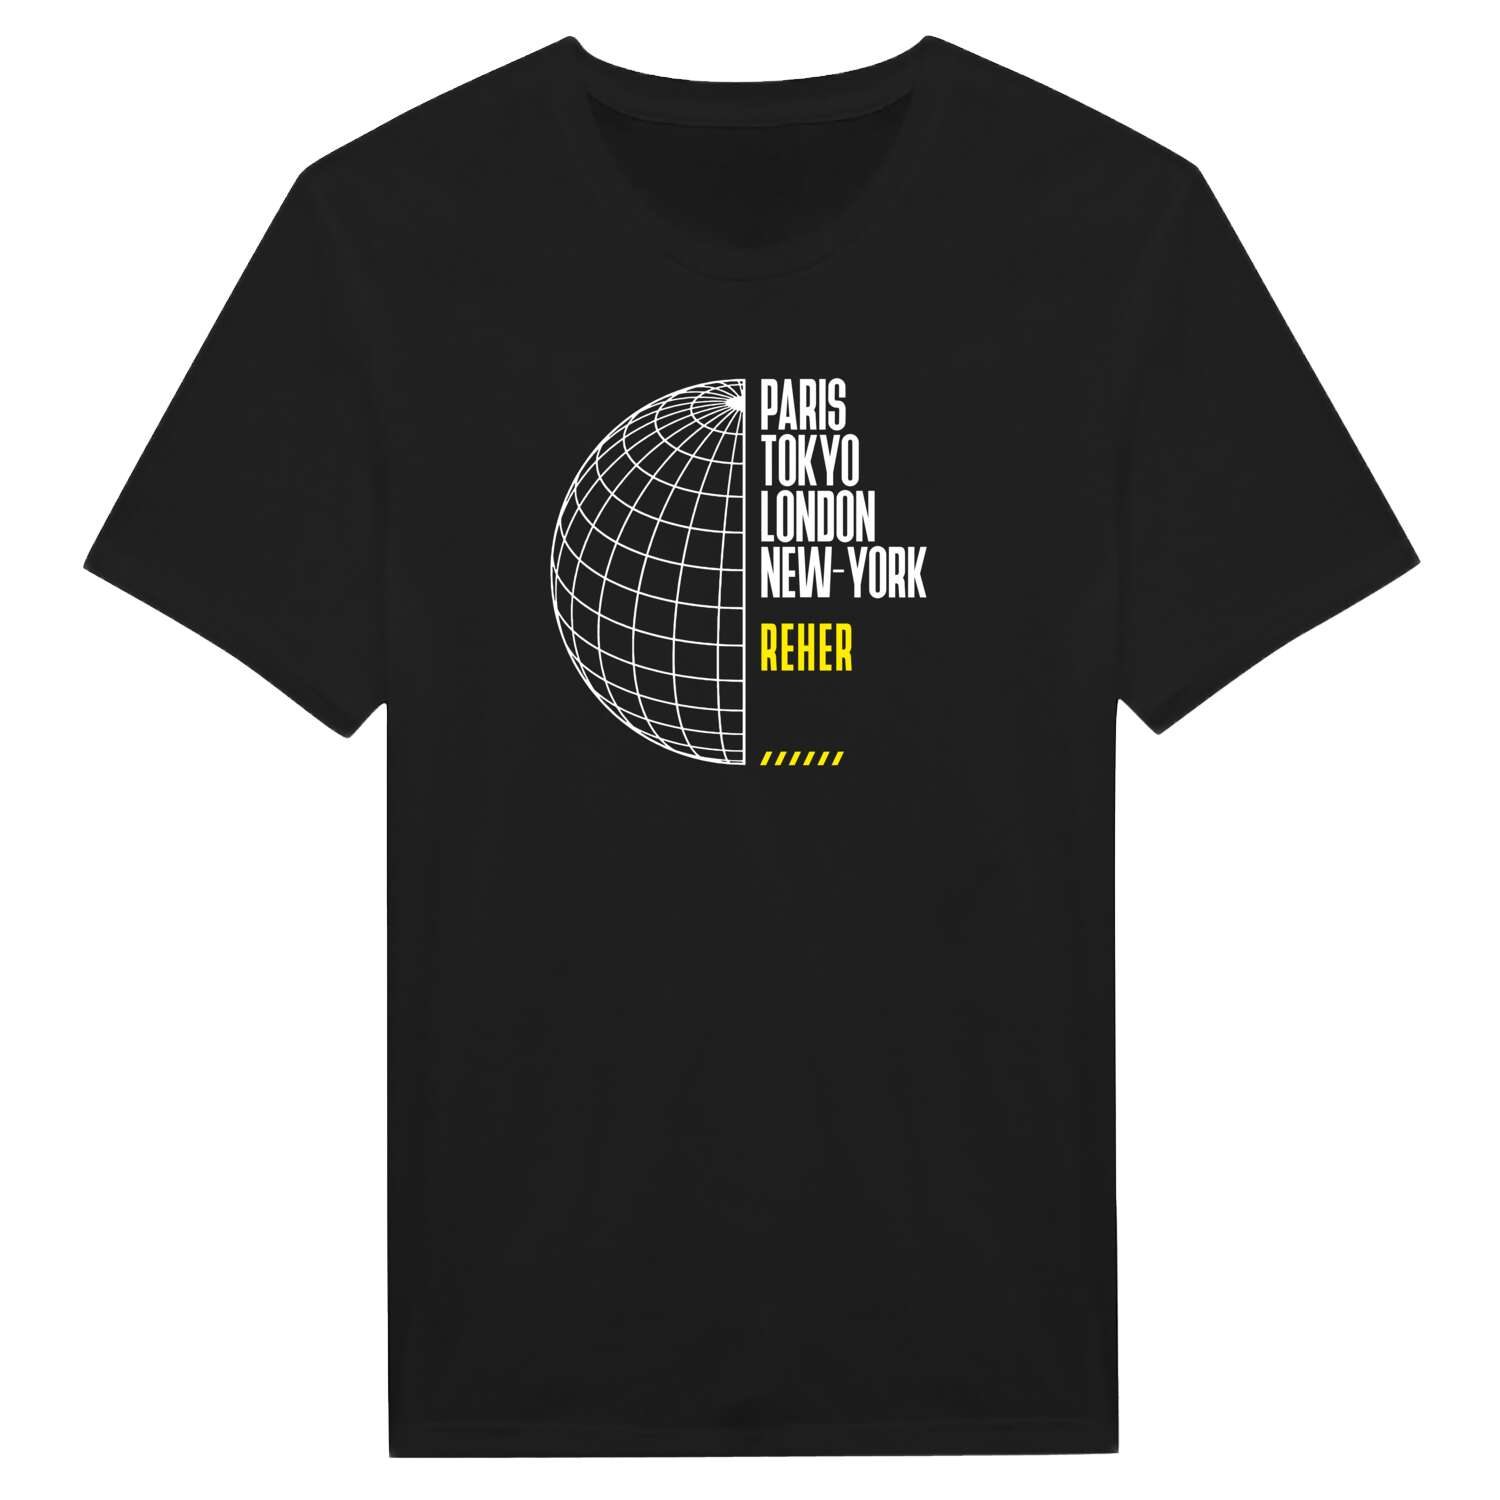 Reher T-Shirt »Paris Tokyo London«